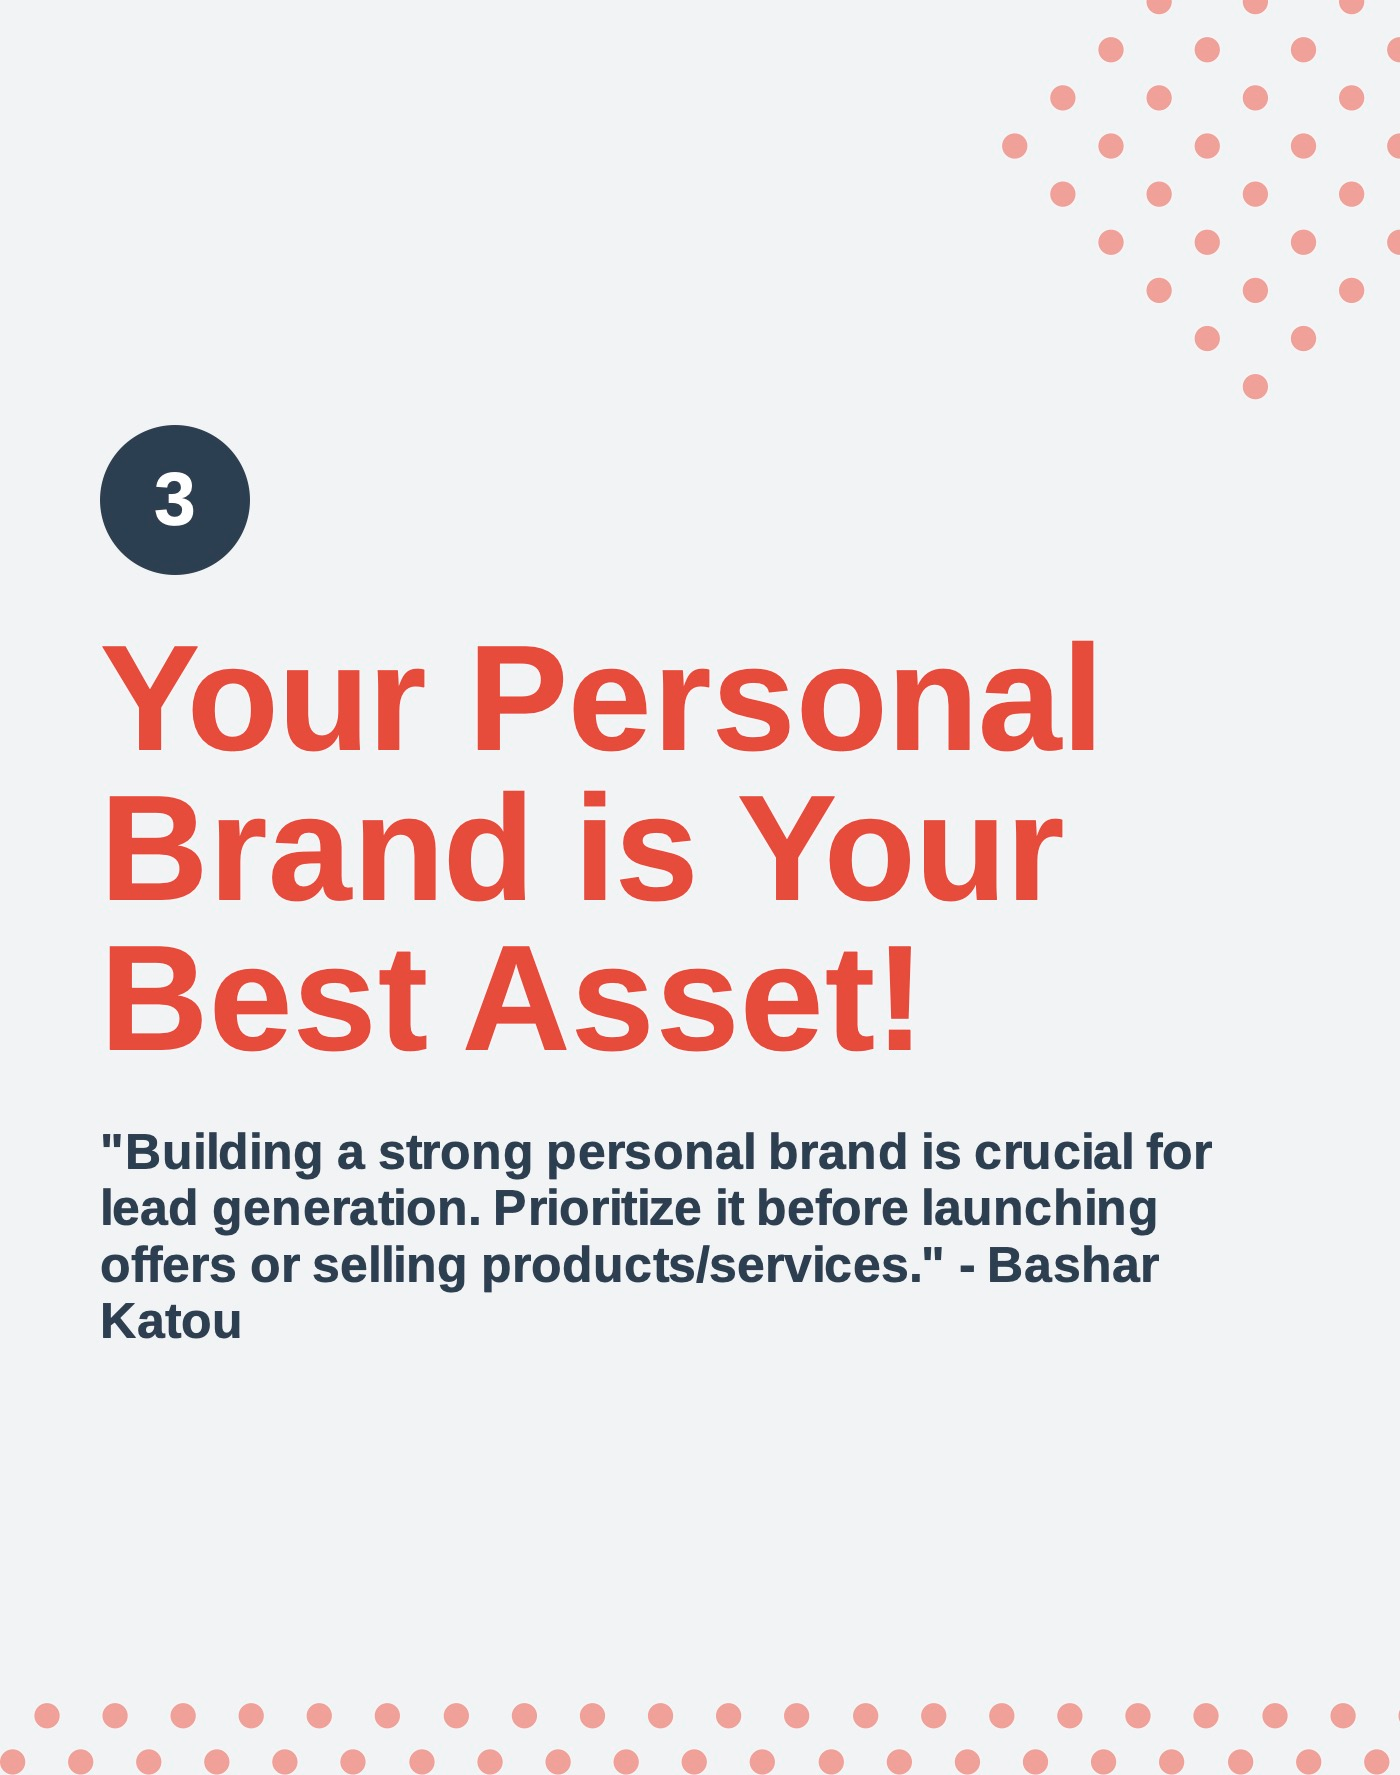 Build a strong personal brand - Bashar Katou